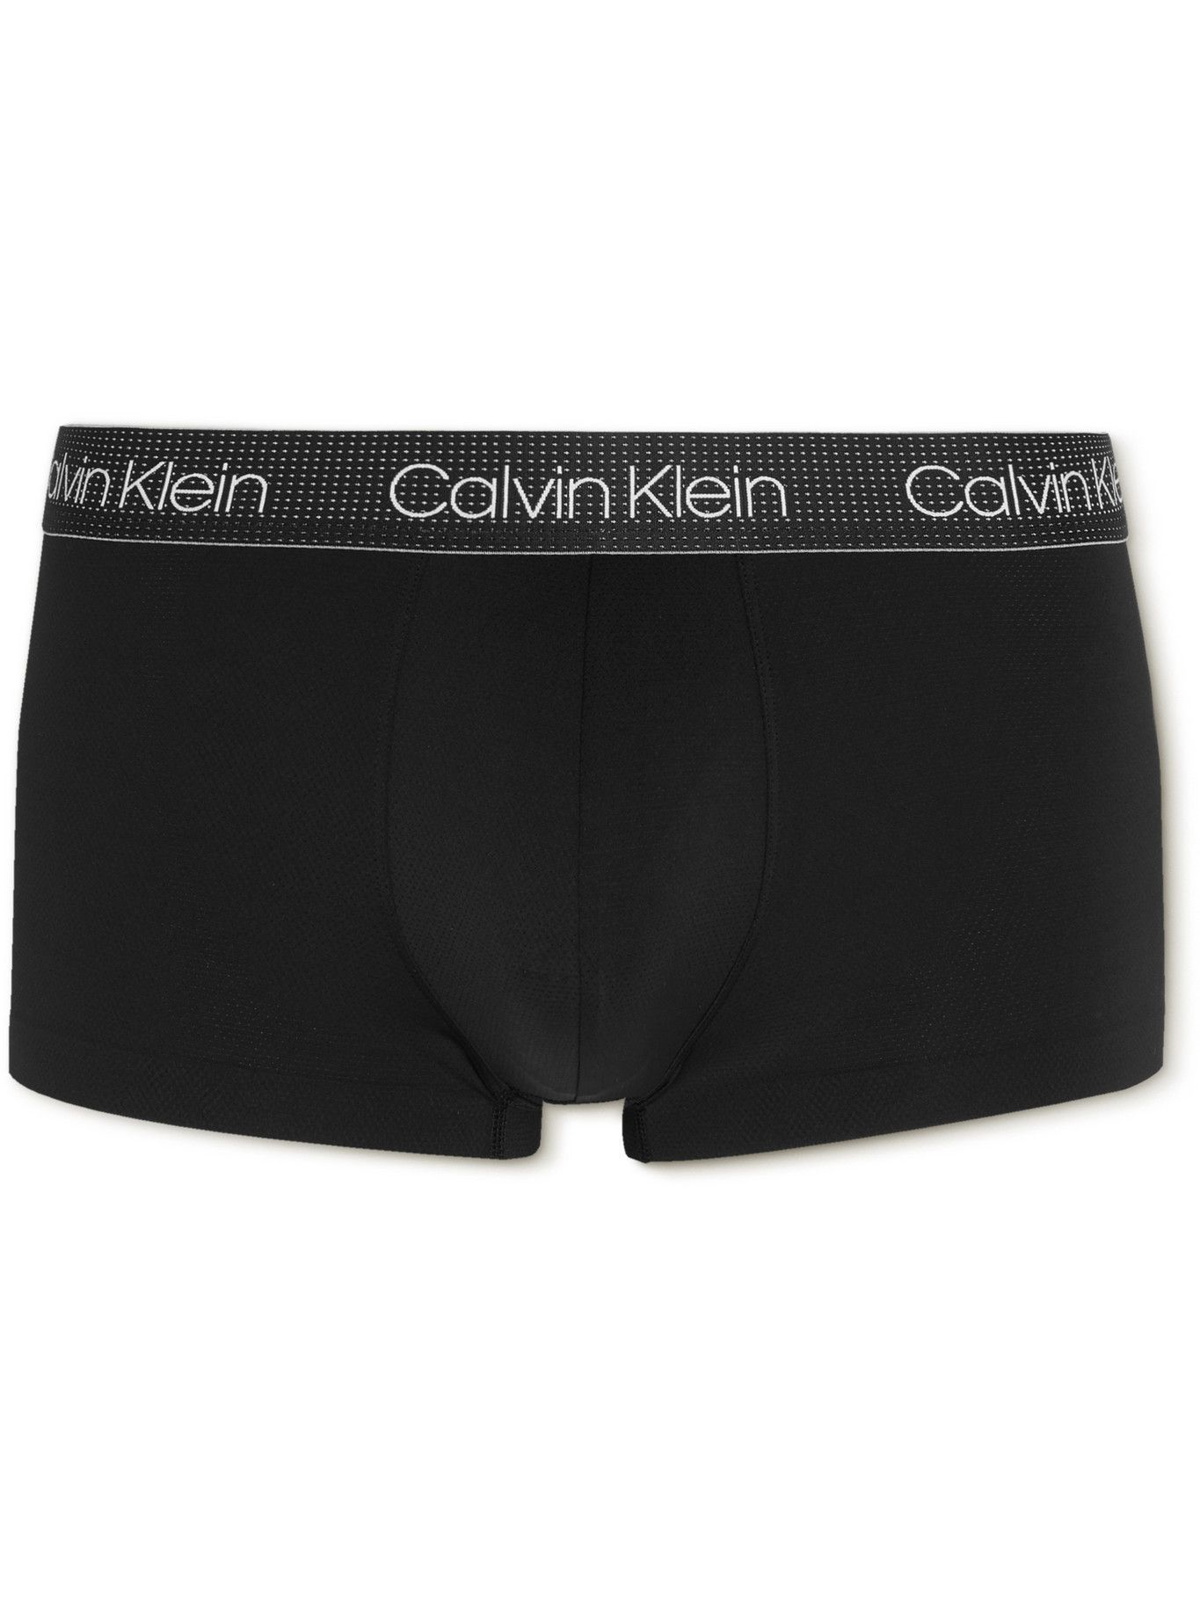 CALVIN KLEIN UNDERWEAR - Air FX Micro-Mesh Briefs - Black Calvin Klein  Underwear